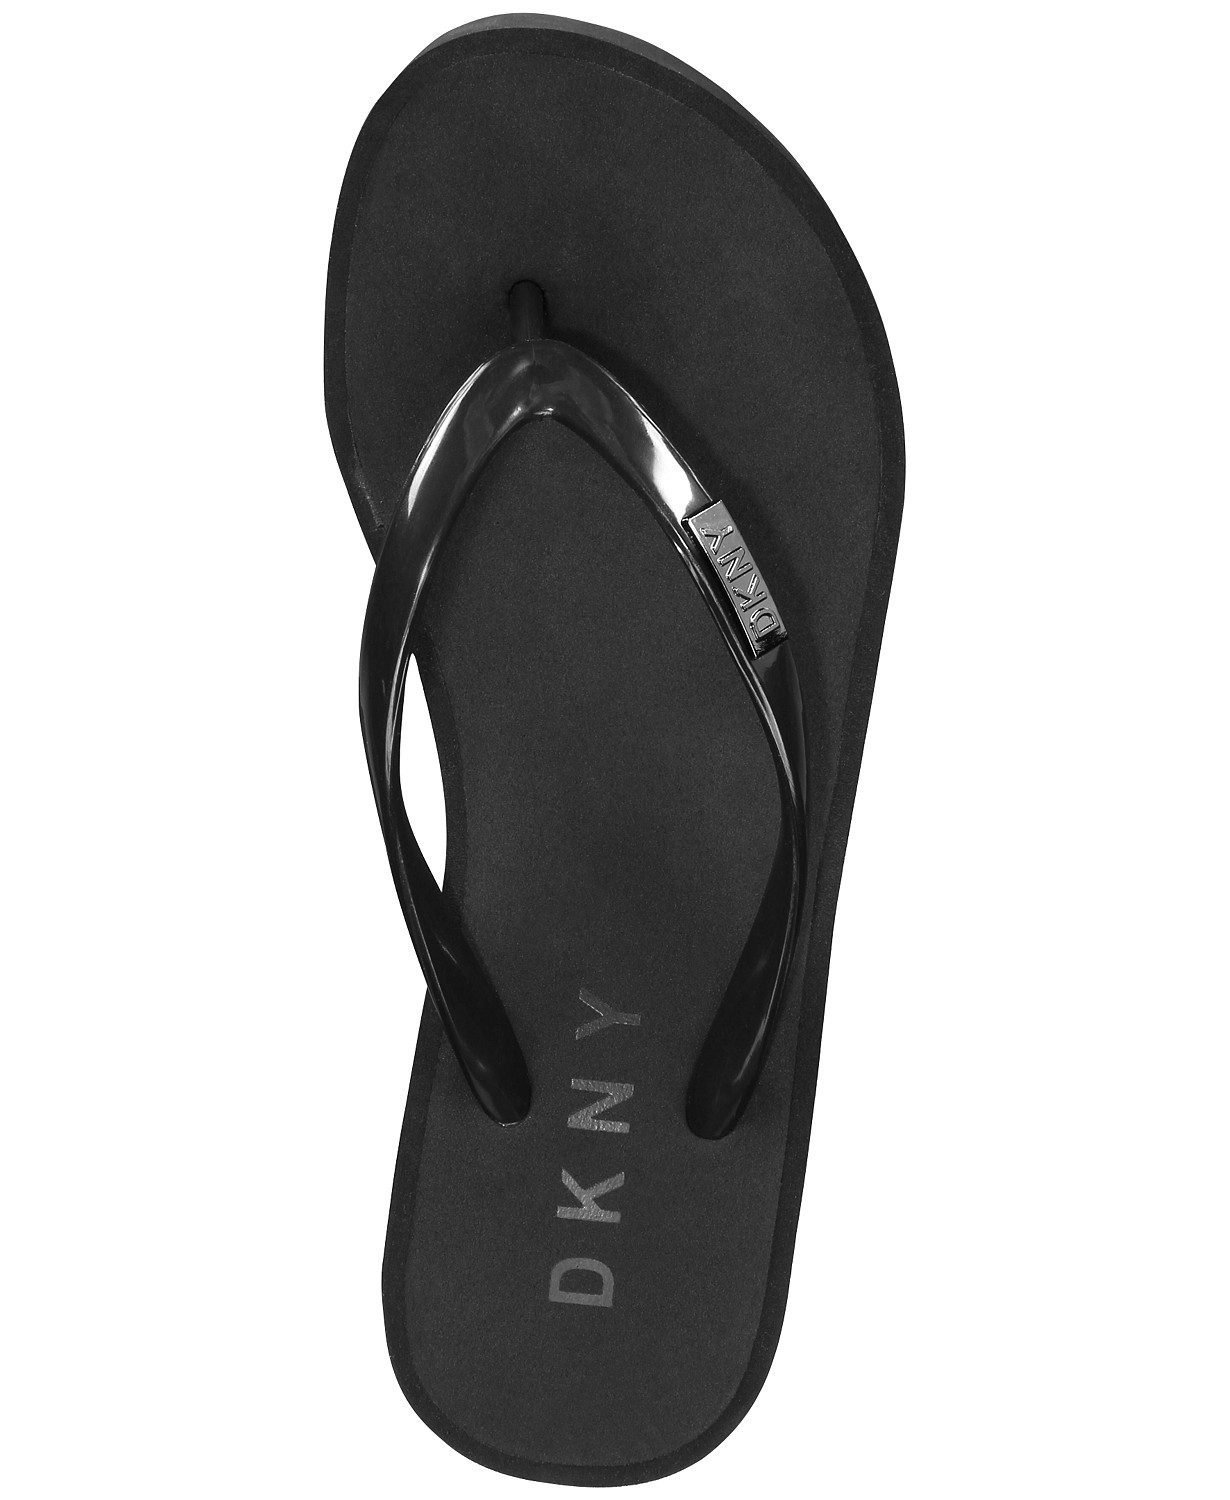 DKNY Womens Flip Flops in Black Color, Size 9 AOO | eBay